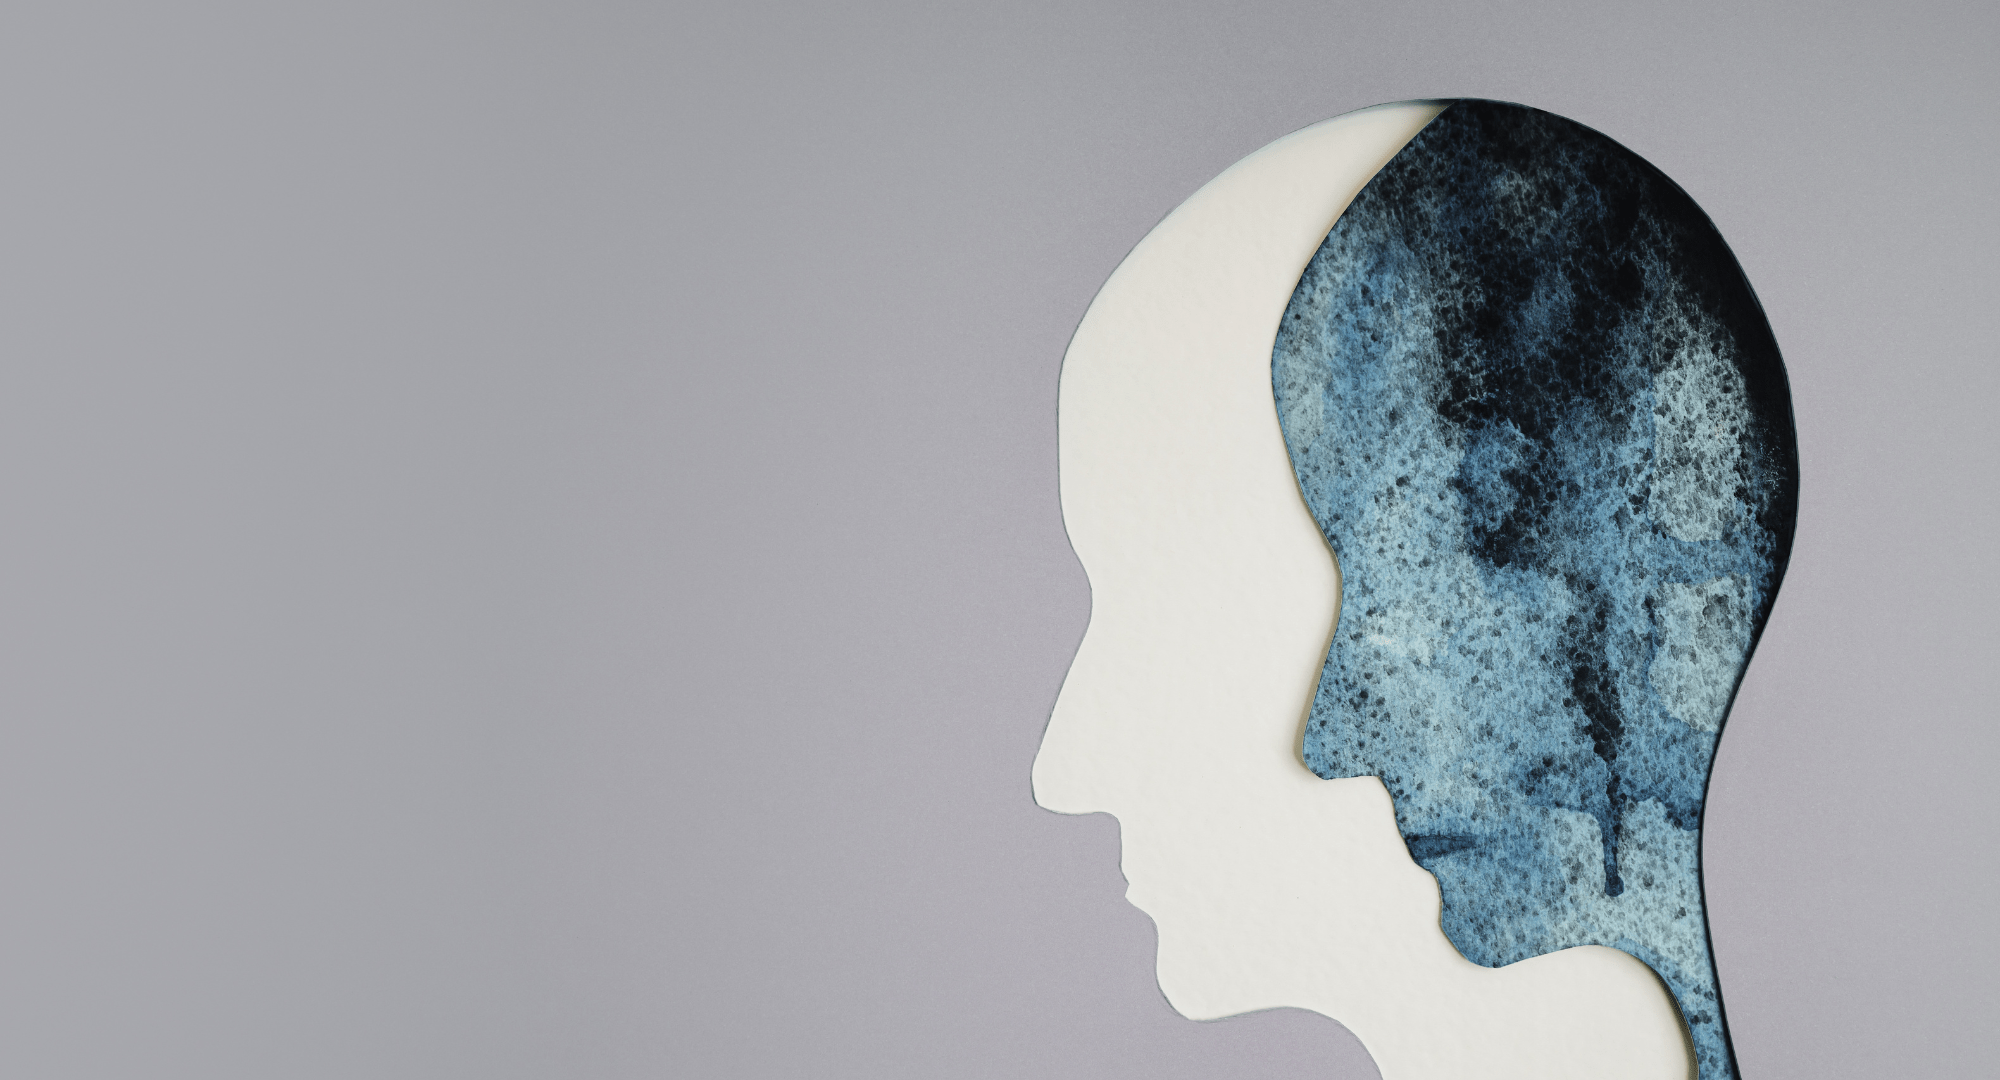 Mental Health - portrait cutout of a head